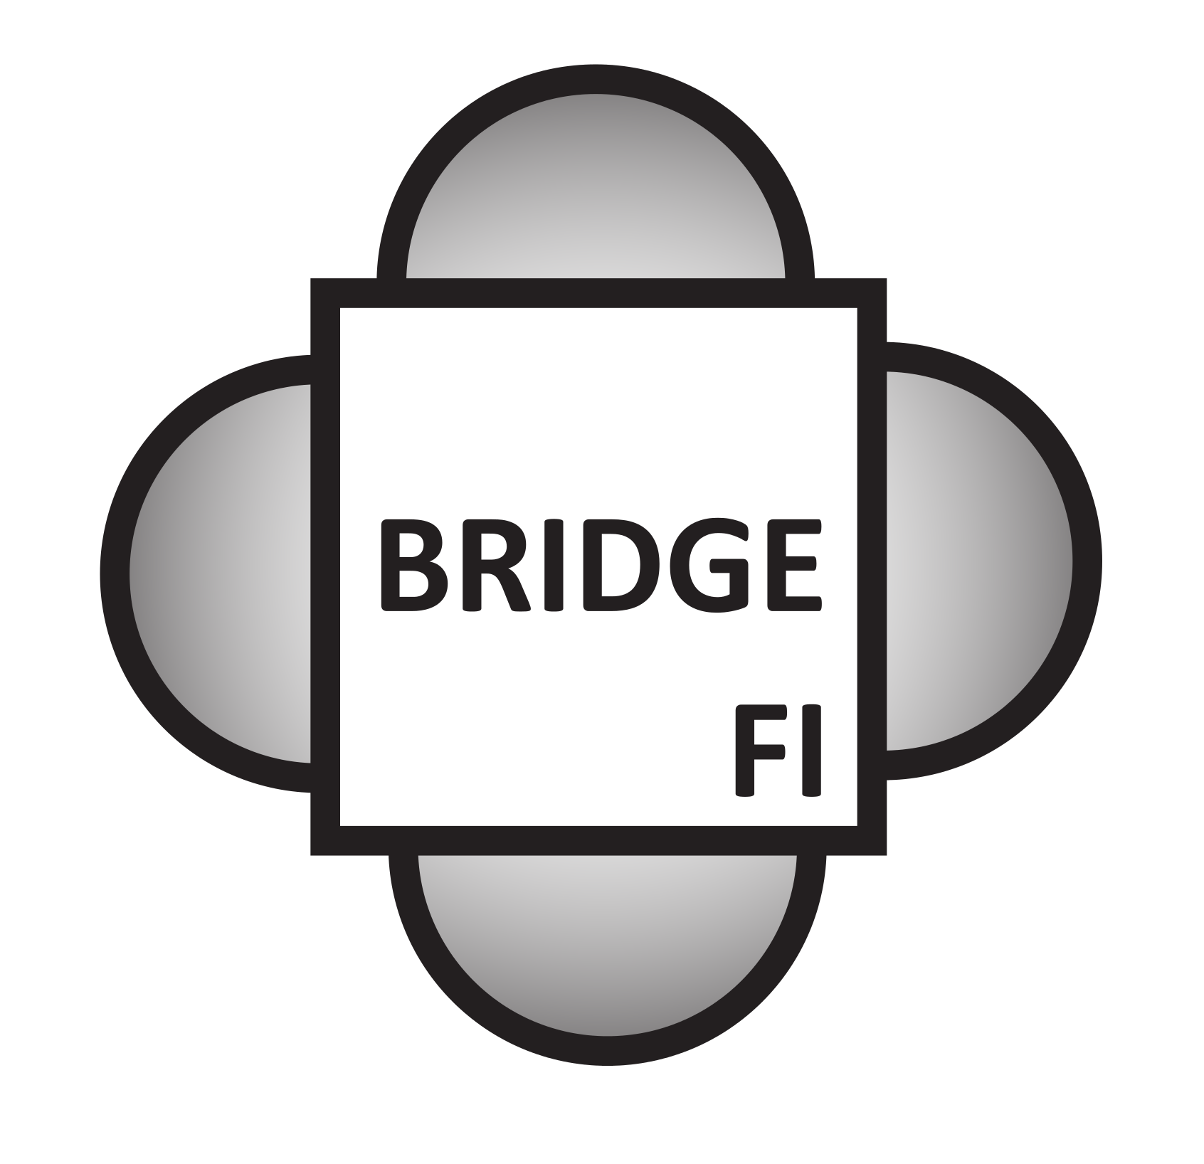 Suomen Bridgeliitto Finlands Bridgeförbund ry MP-kilpailukategoriat ja